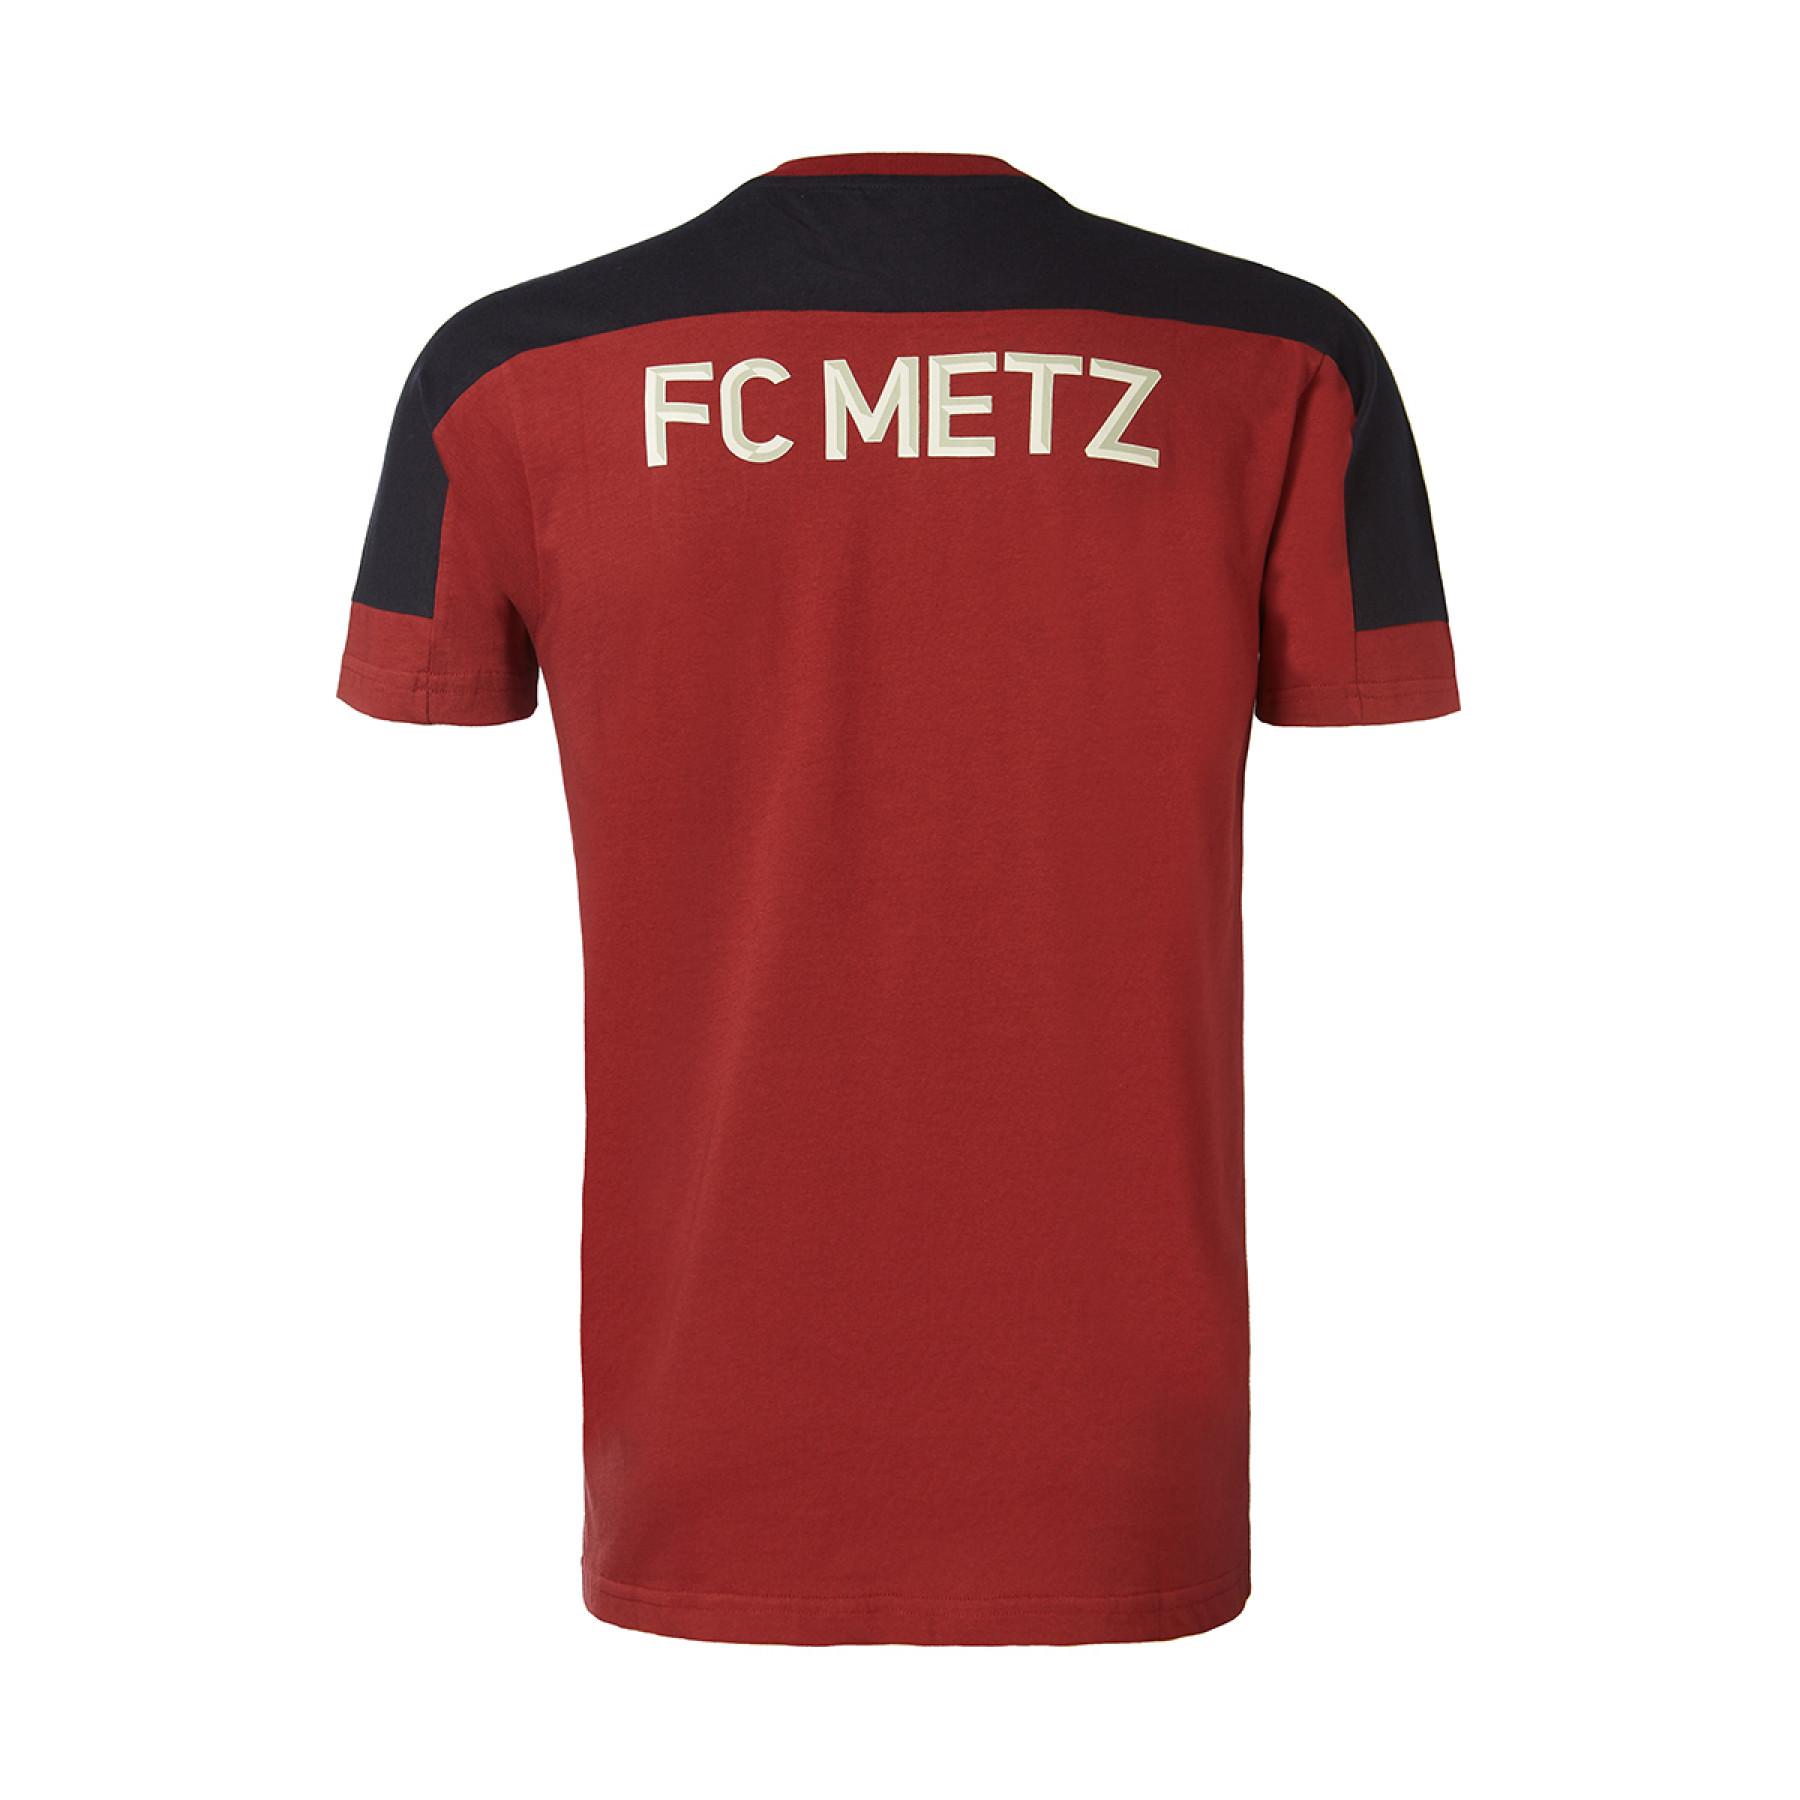 Camiseta para niños FC Metz 2020/21 algardi